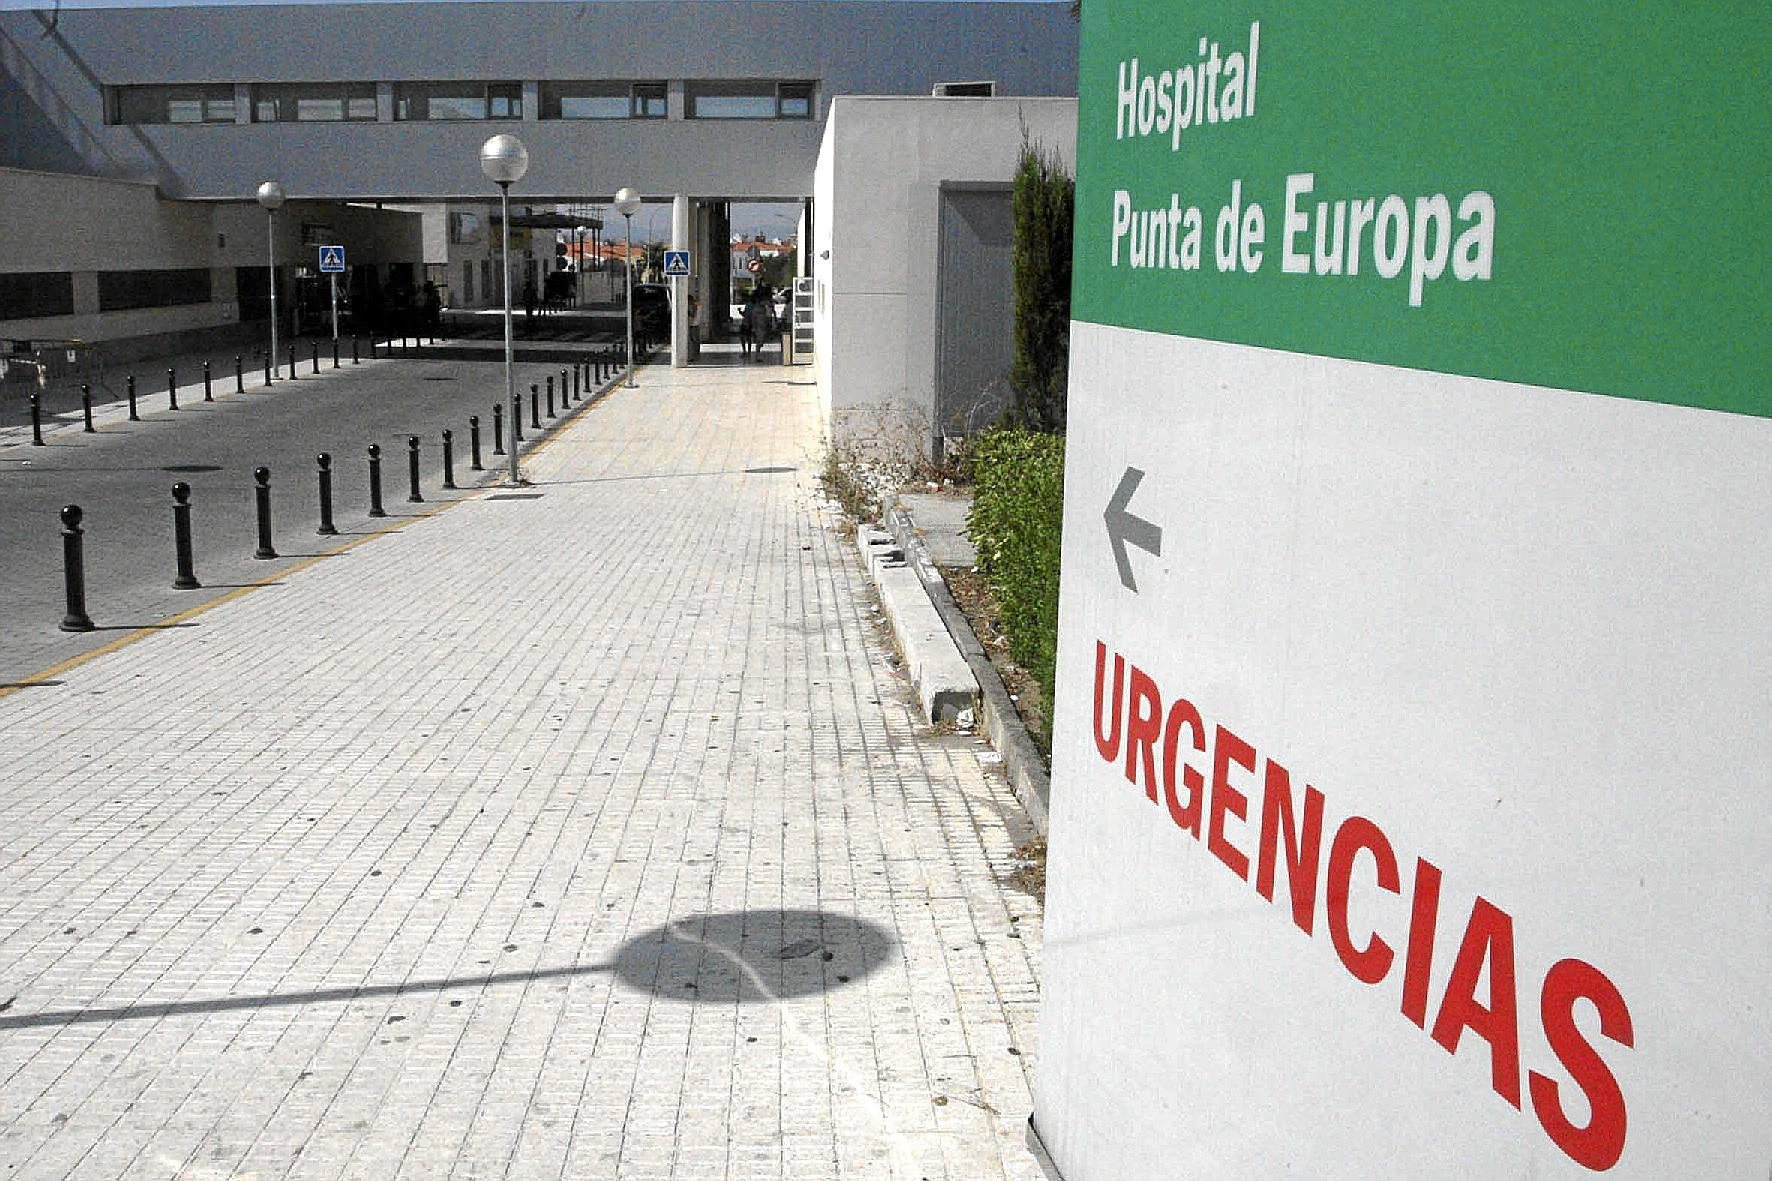 La entrada a urgencias del Hospital Punta de Europa de Algeciras.